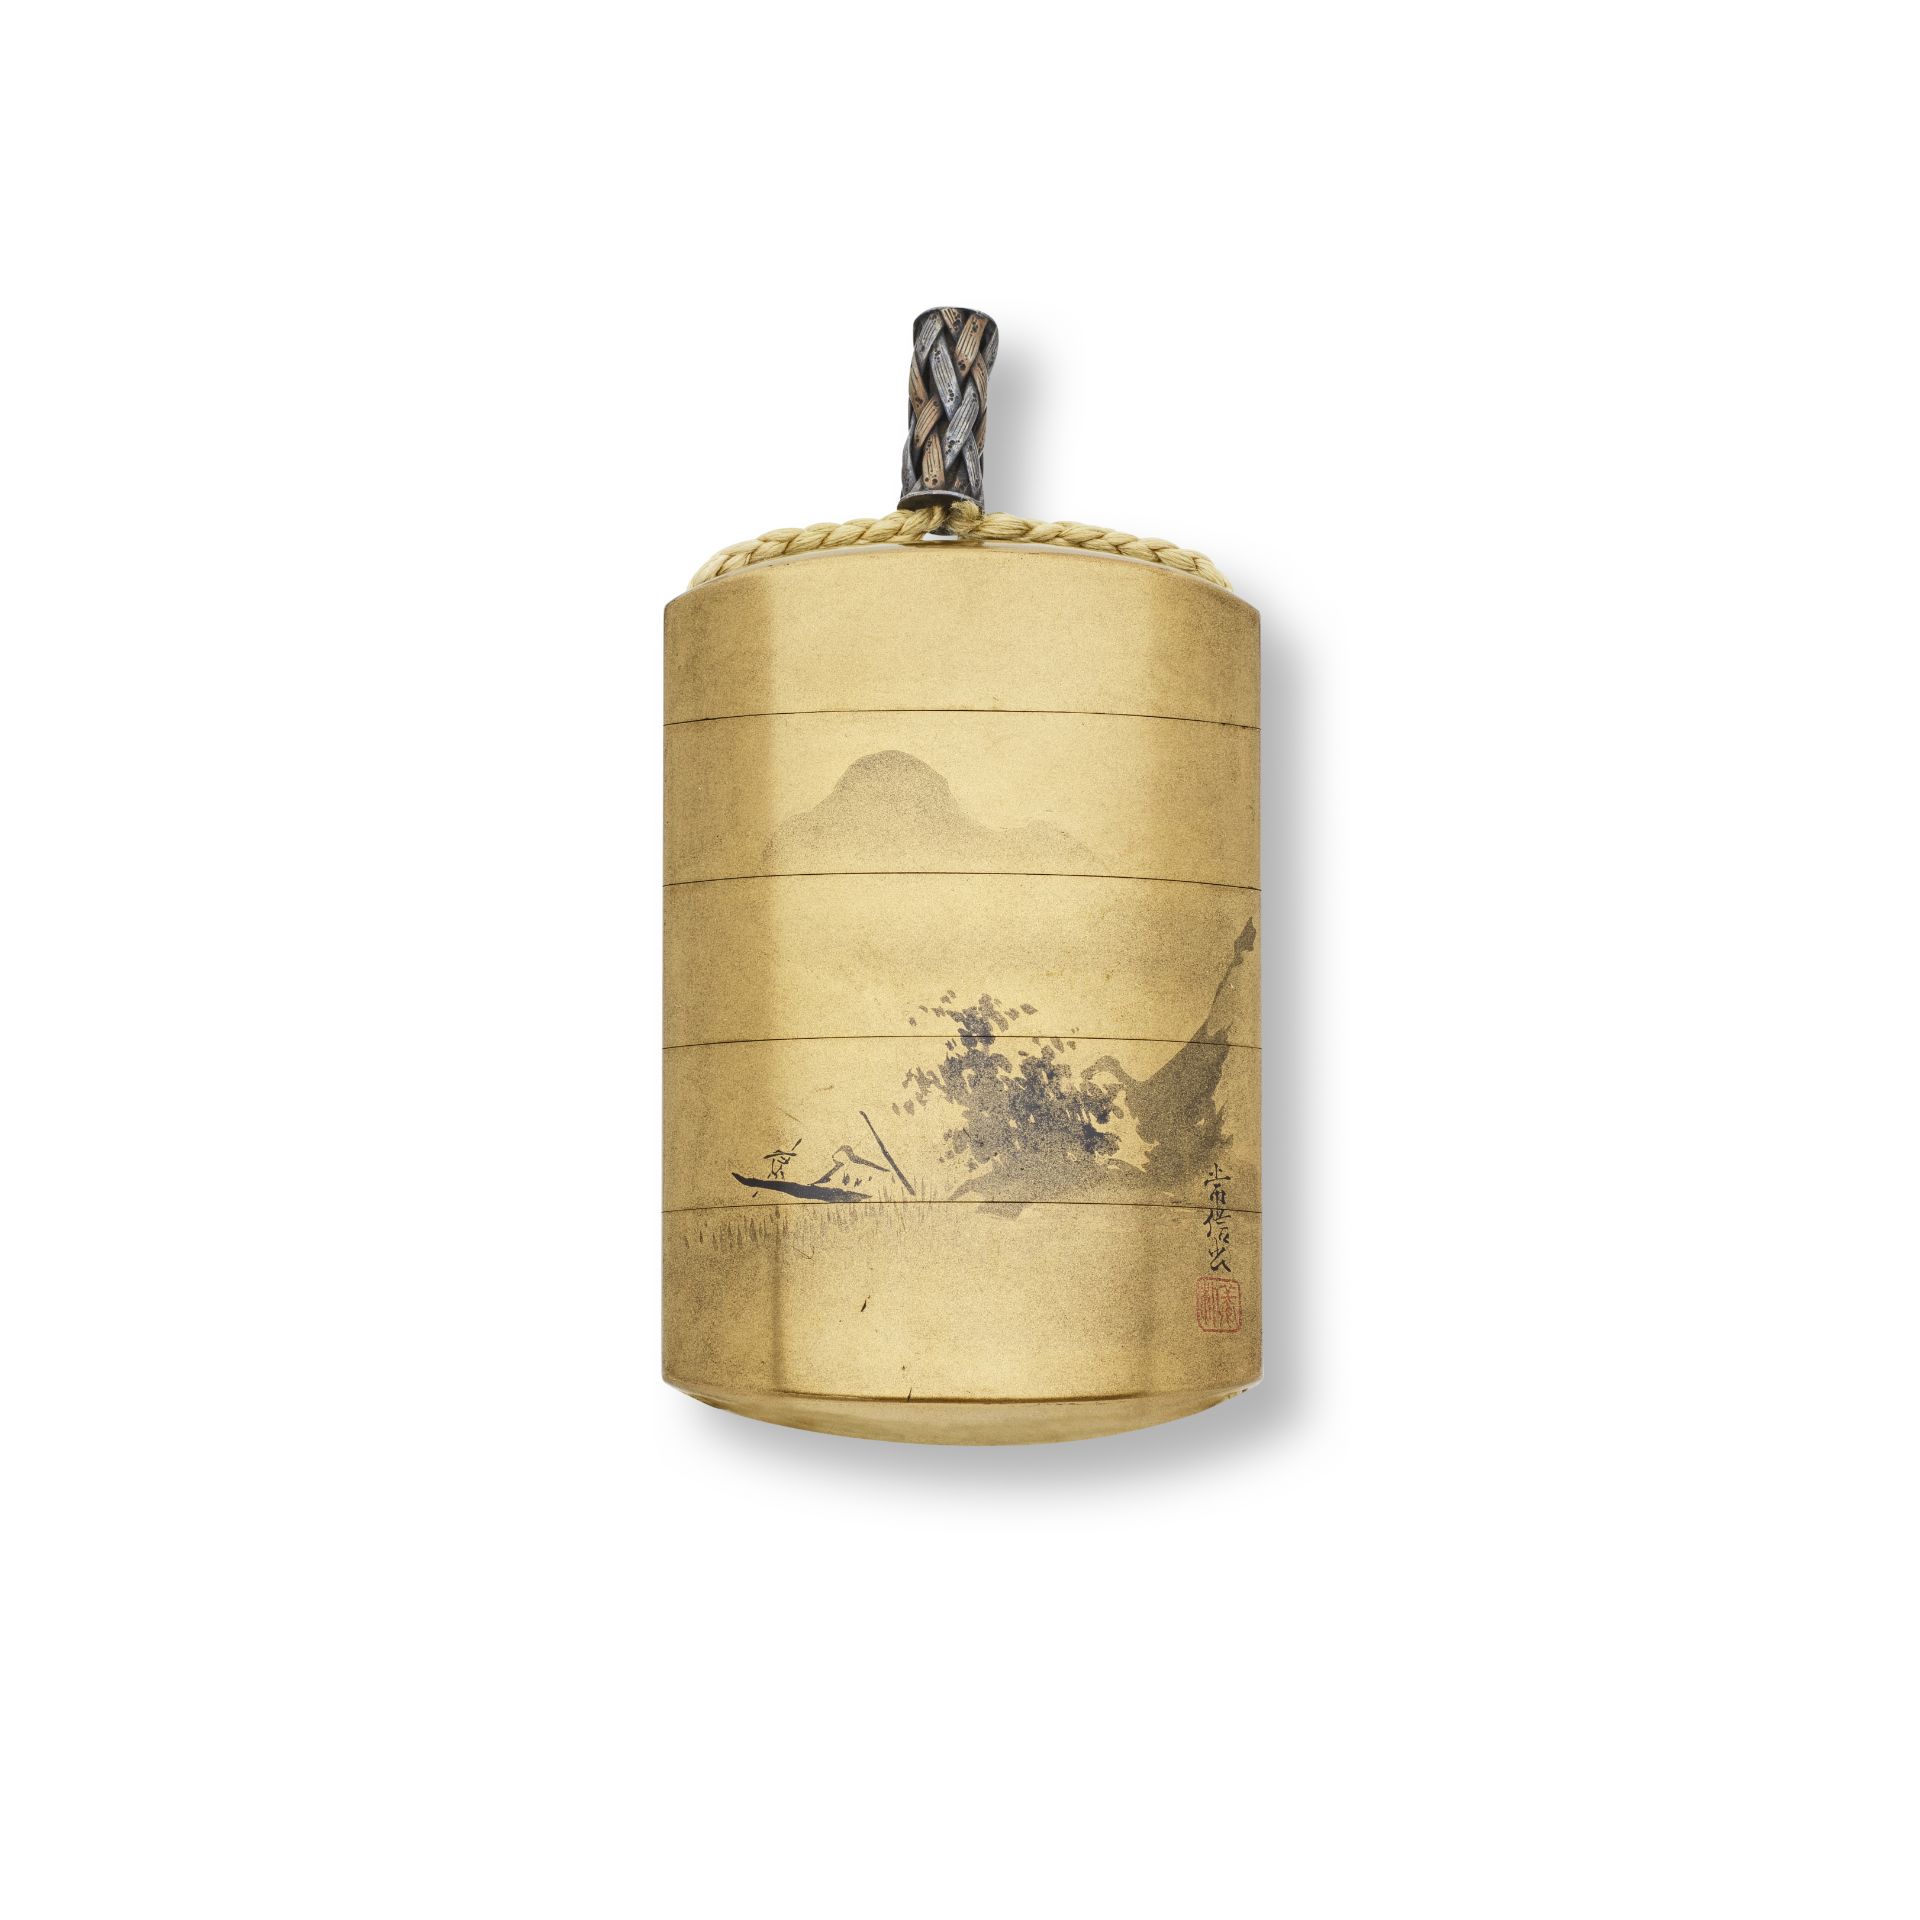 A GOLD-LACQUER FOUR-CASE INRO Edo period (1615-1868) or Meiji era (1868-1912), mid-/late 19th ce...